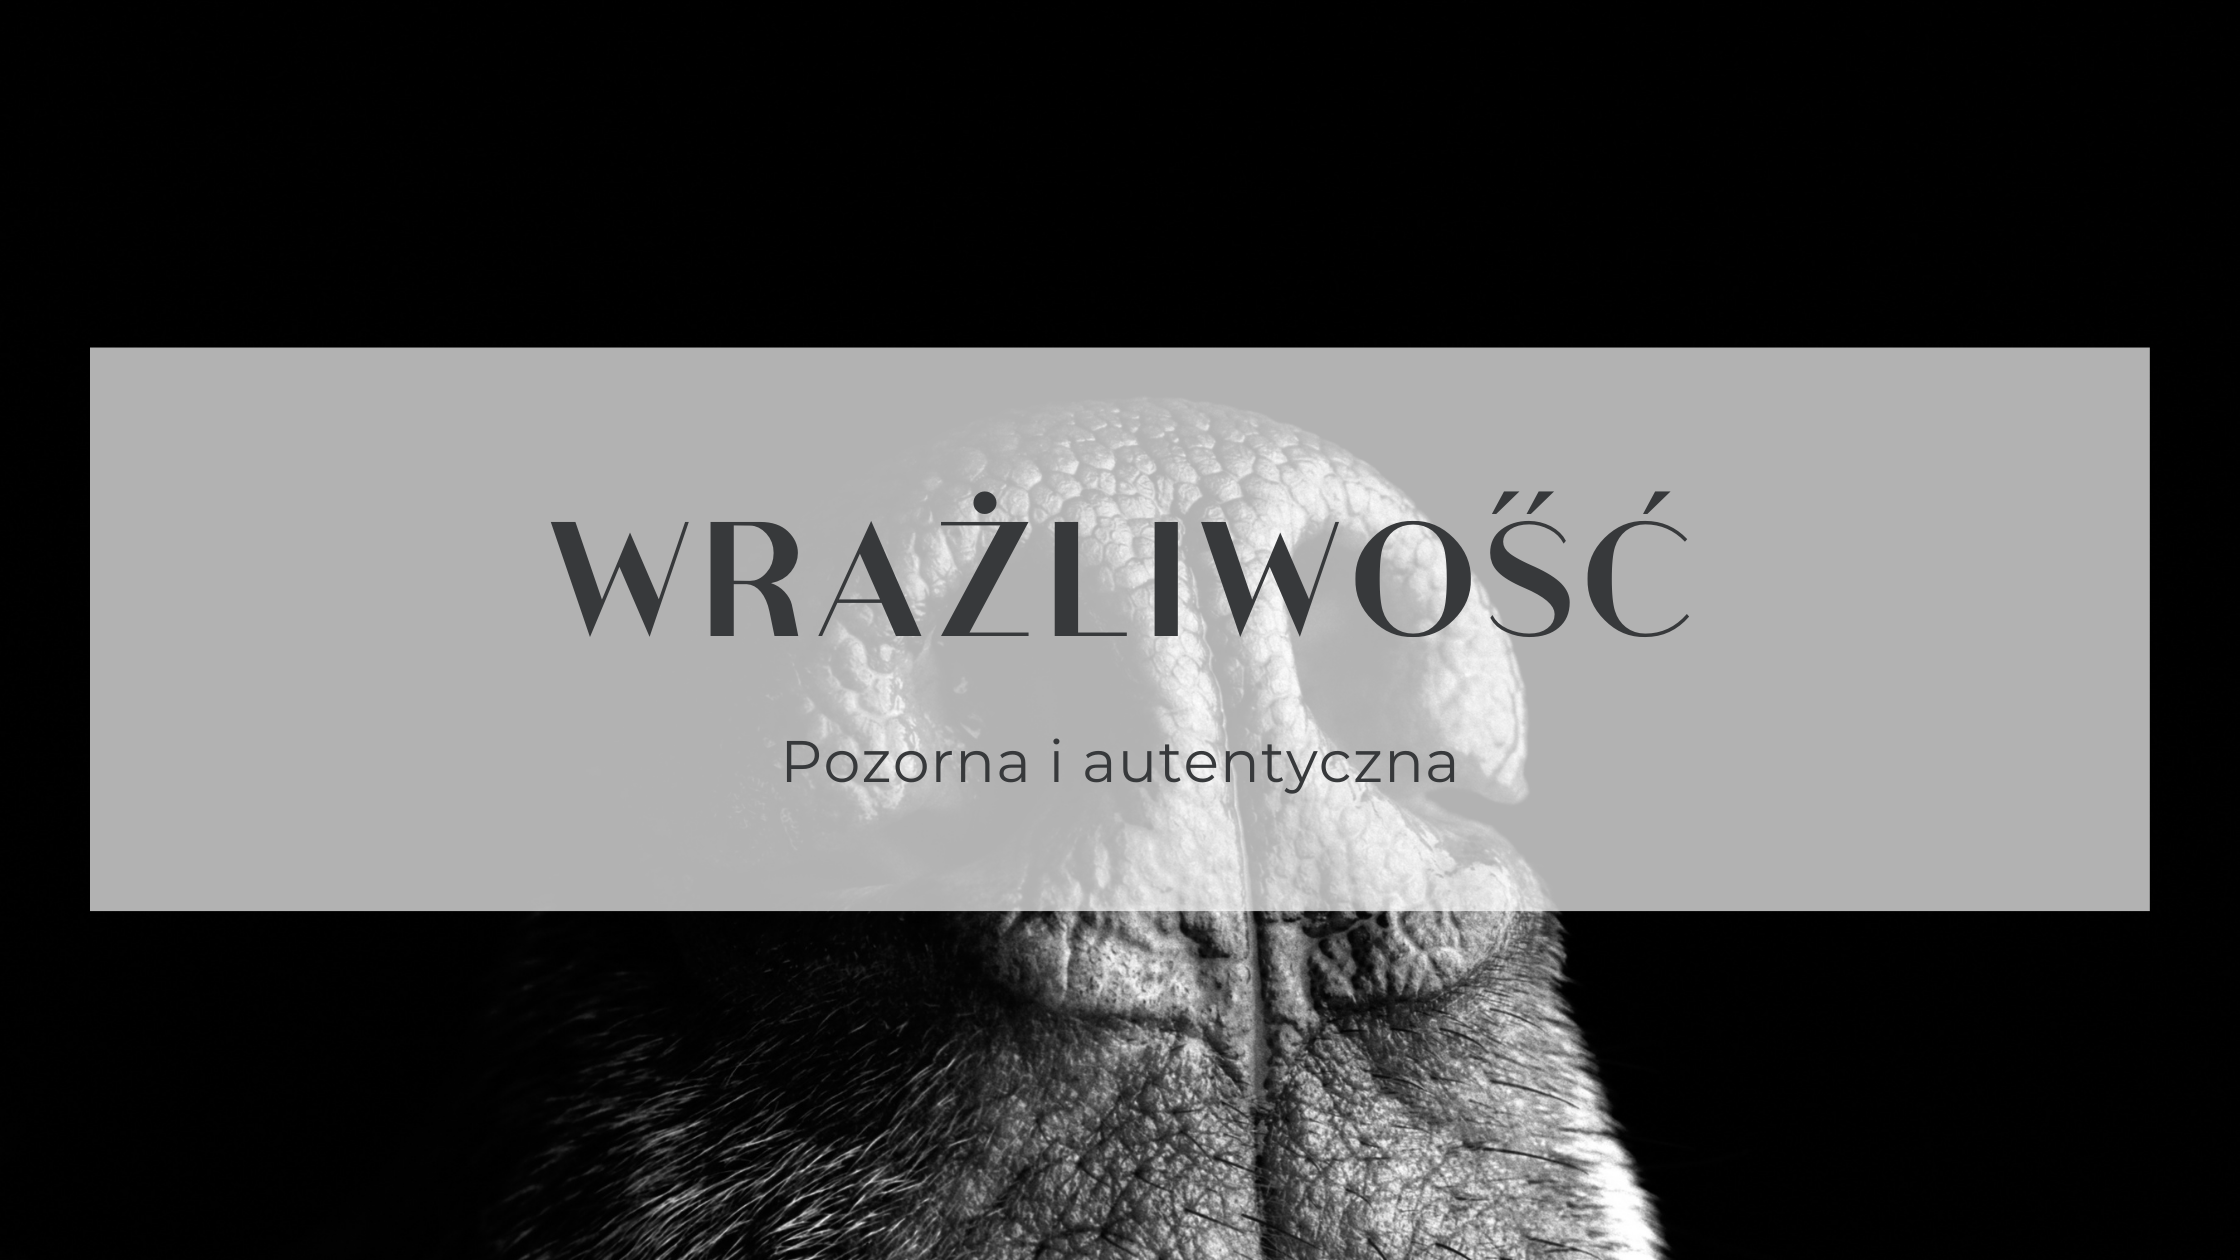 You are currently viewing Wrażliwość